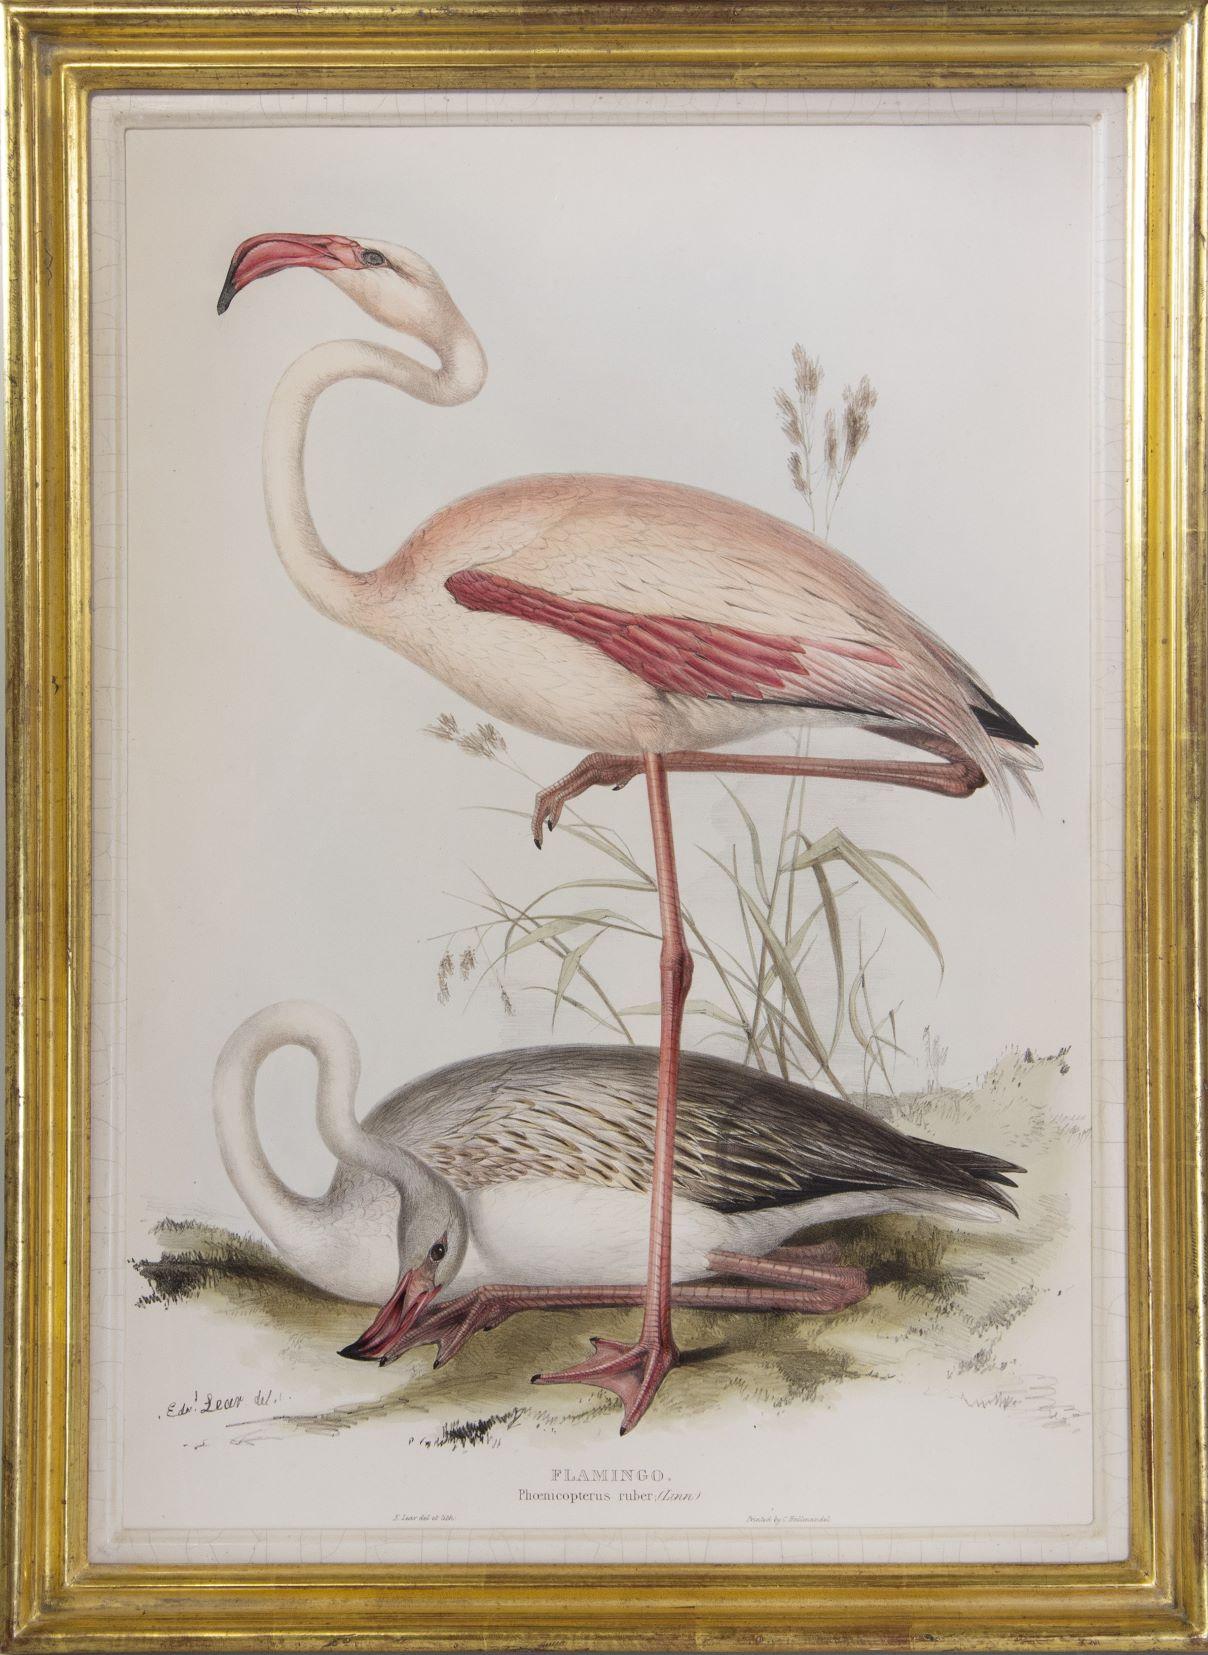 Edward Lear Animal Print - A Group of Four Wading Birds.